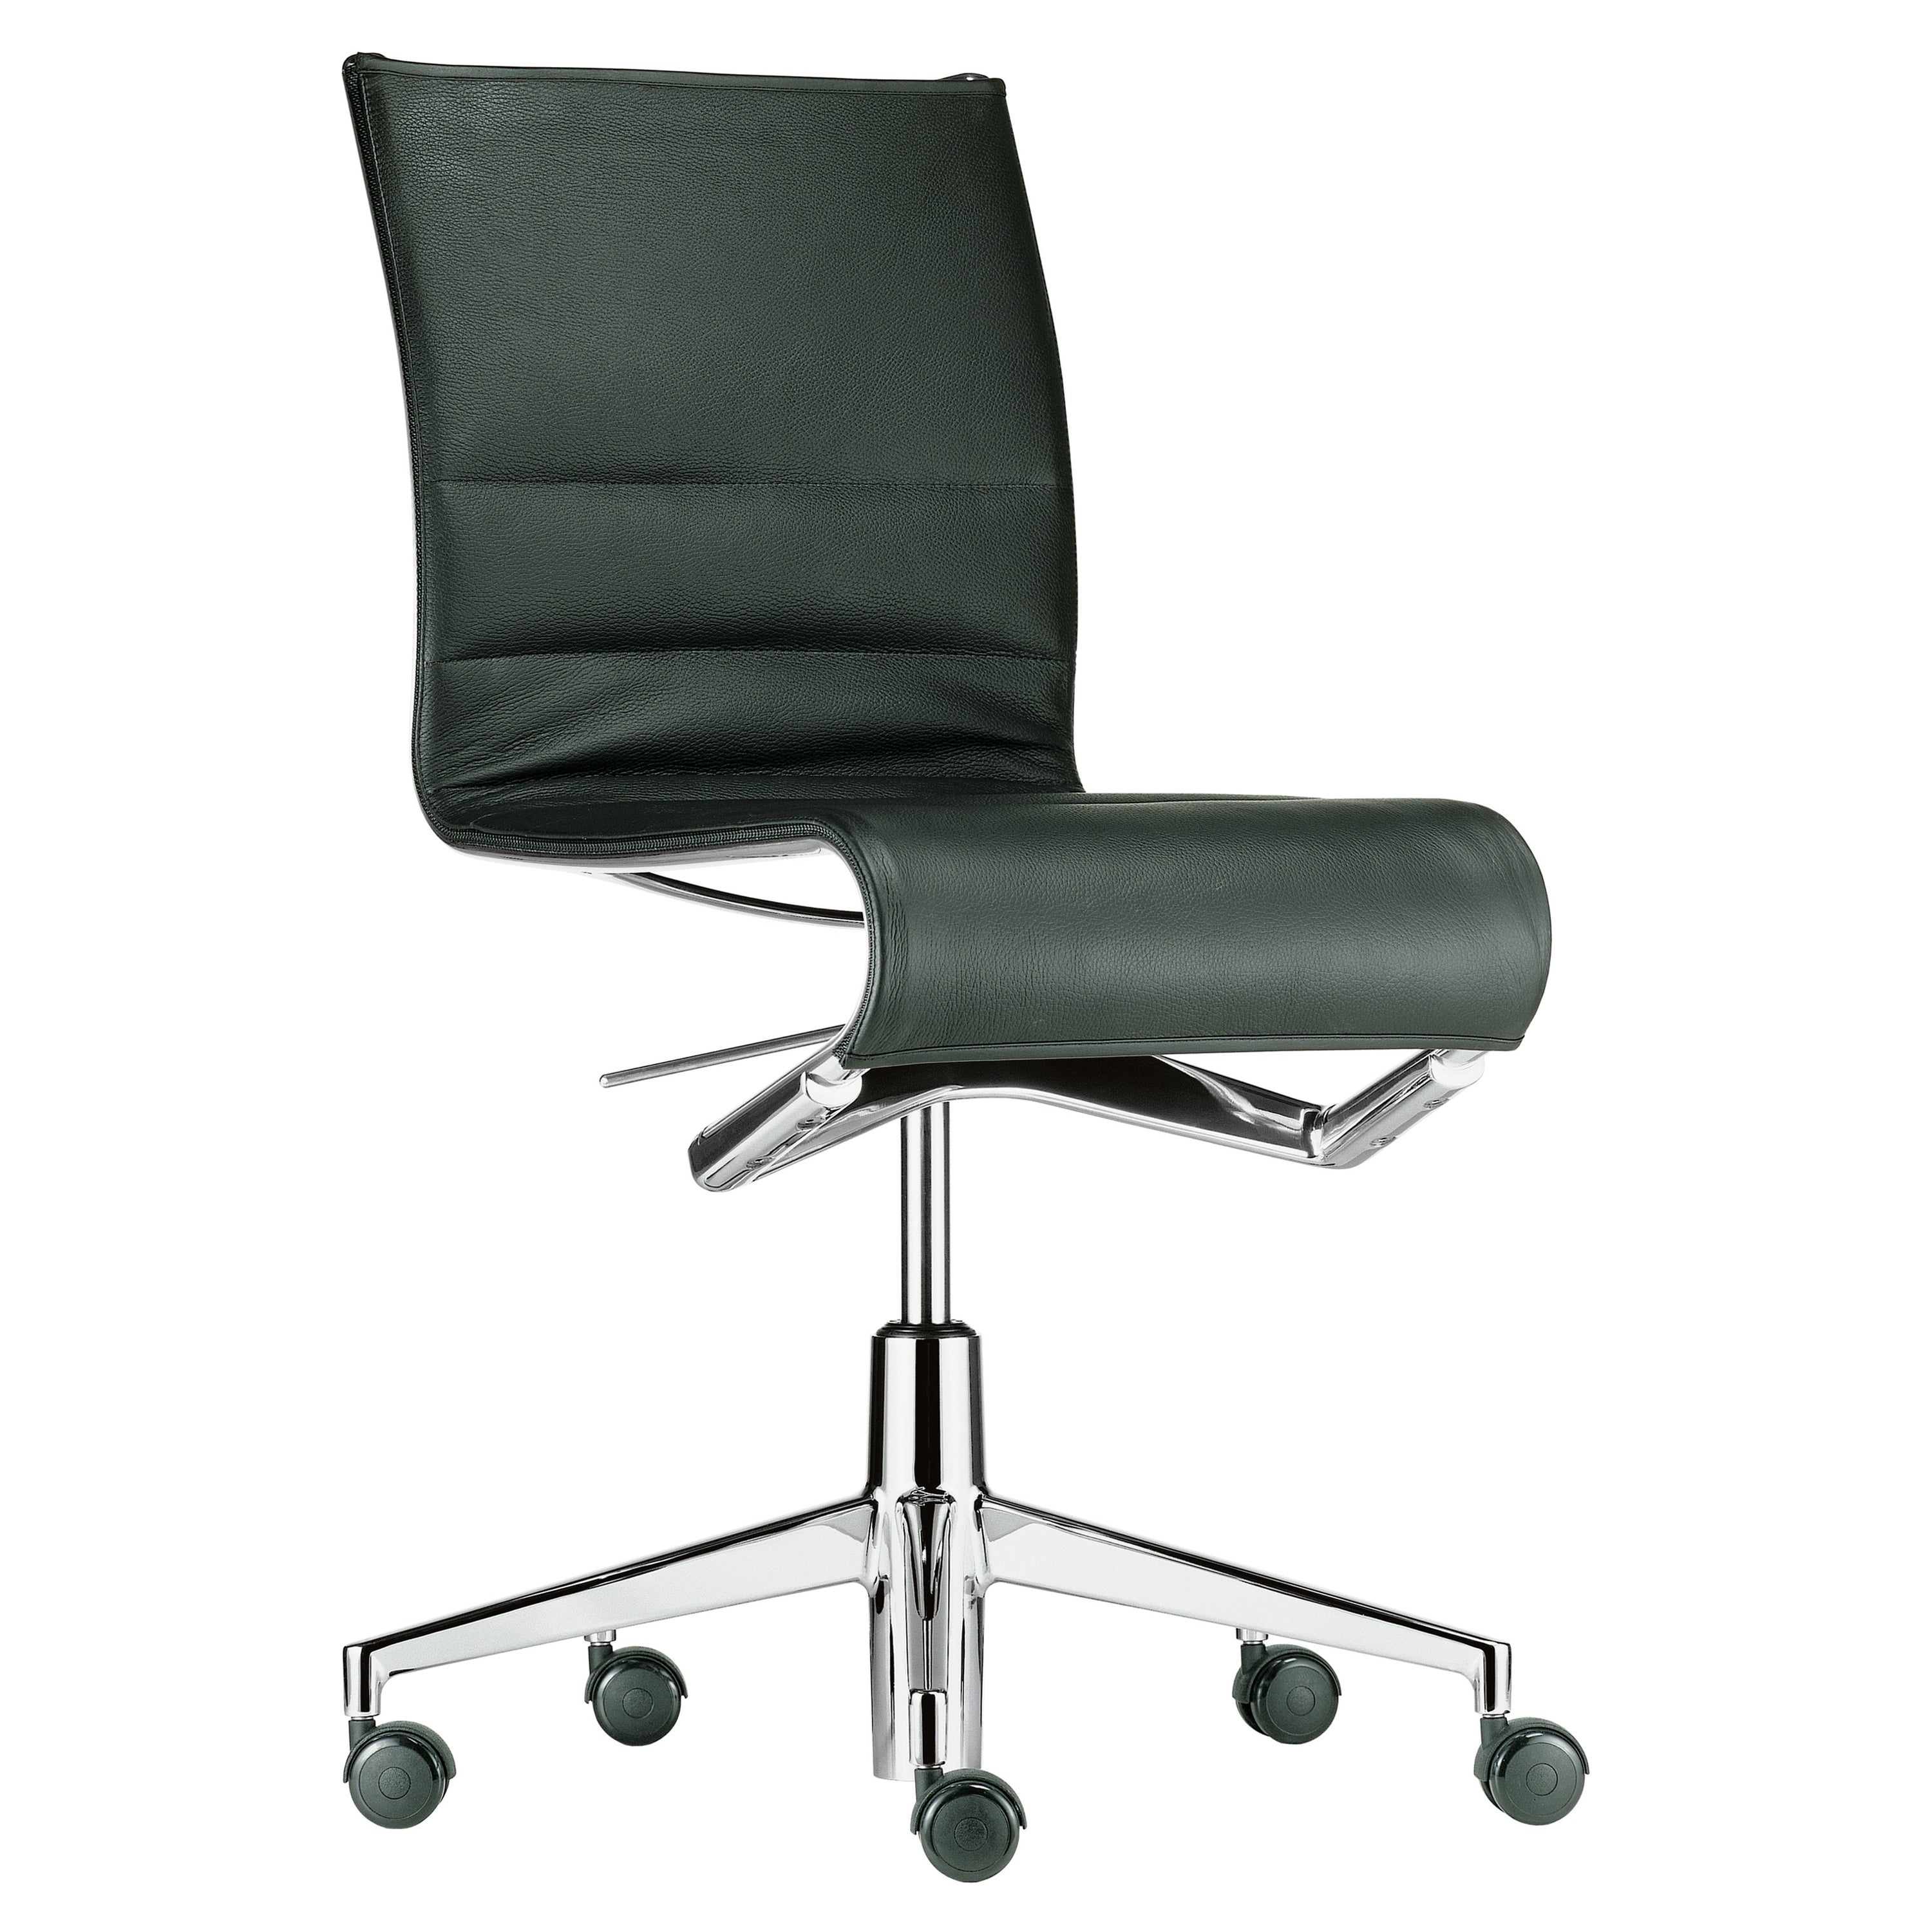 Alias 432 Rollingframe 44 Chair Bin lack Leather with Chromed Aluminum Frame